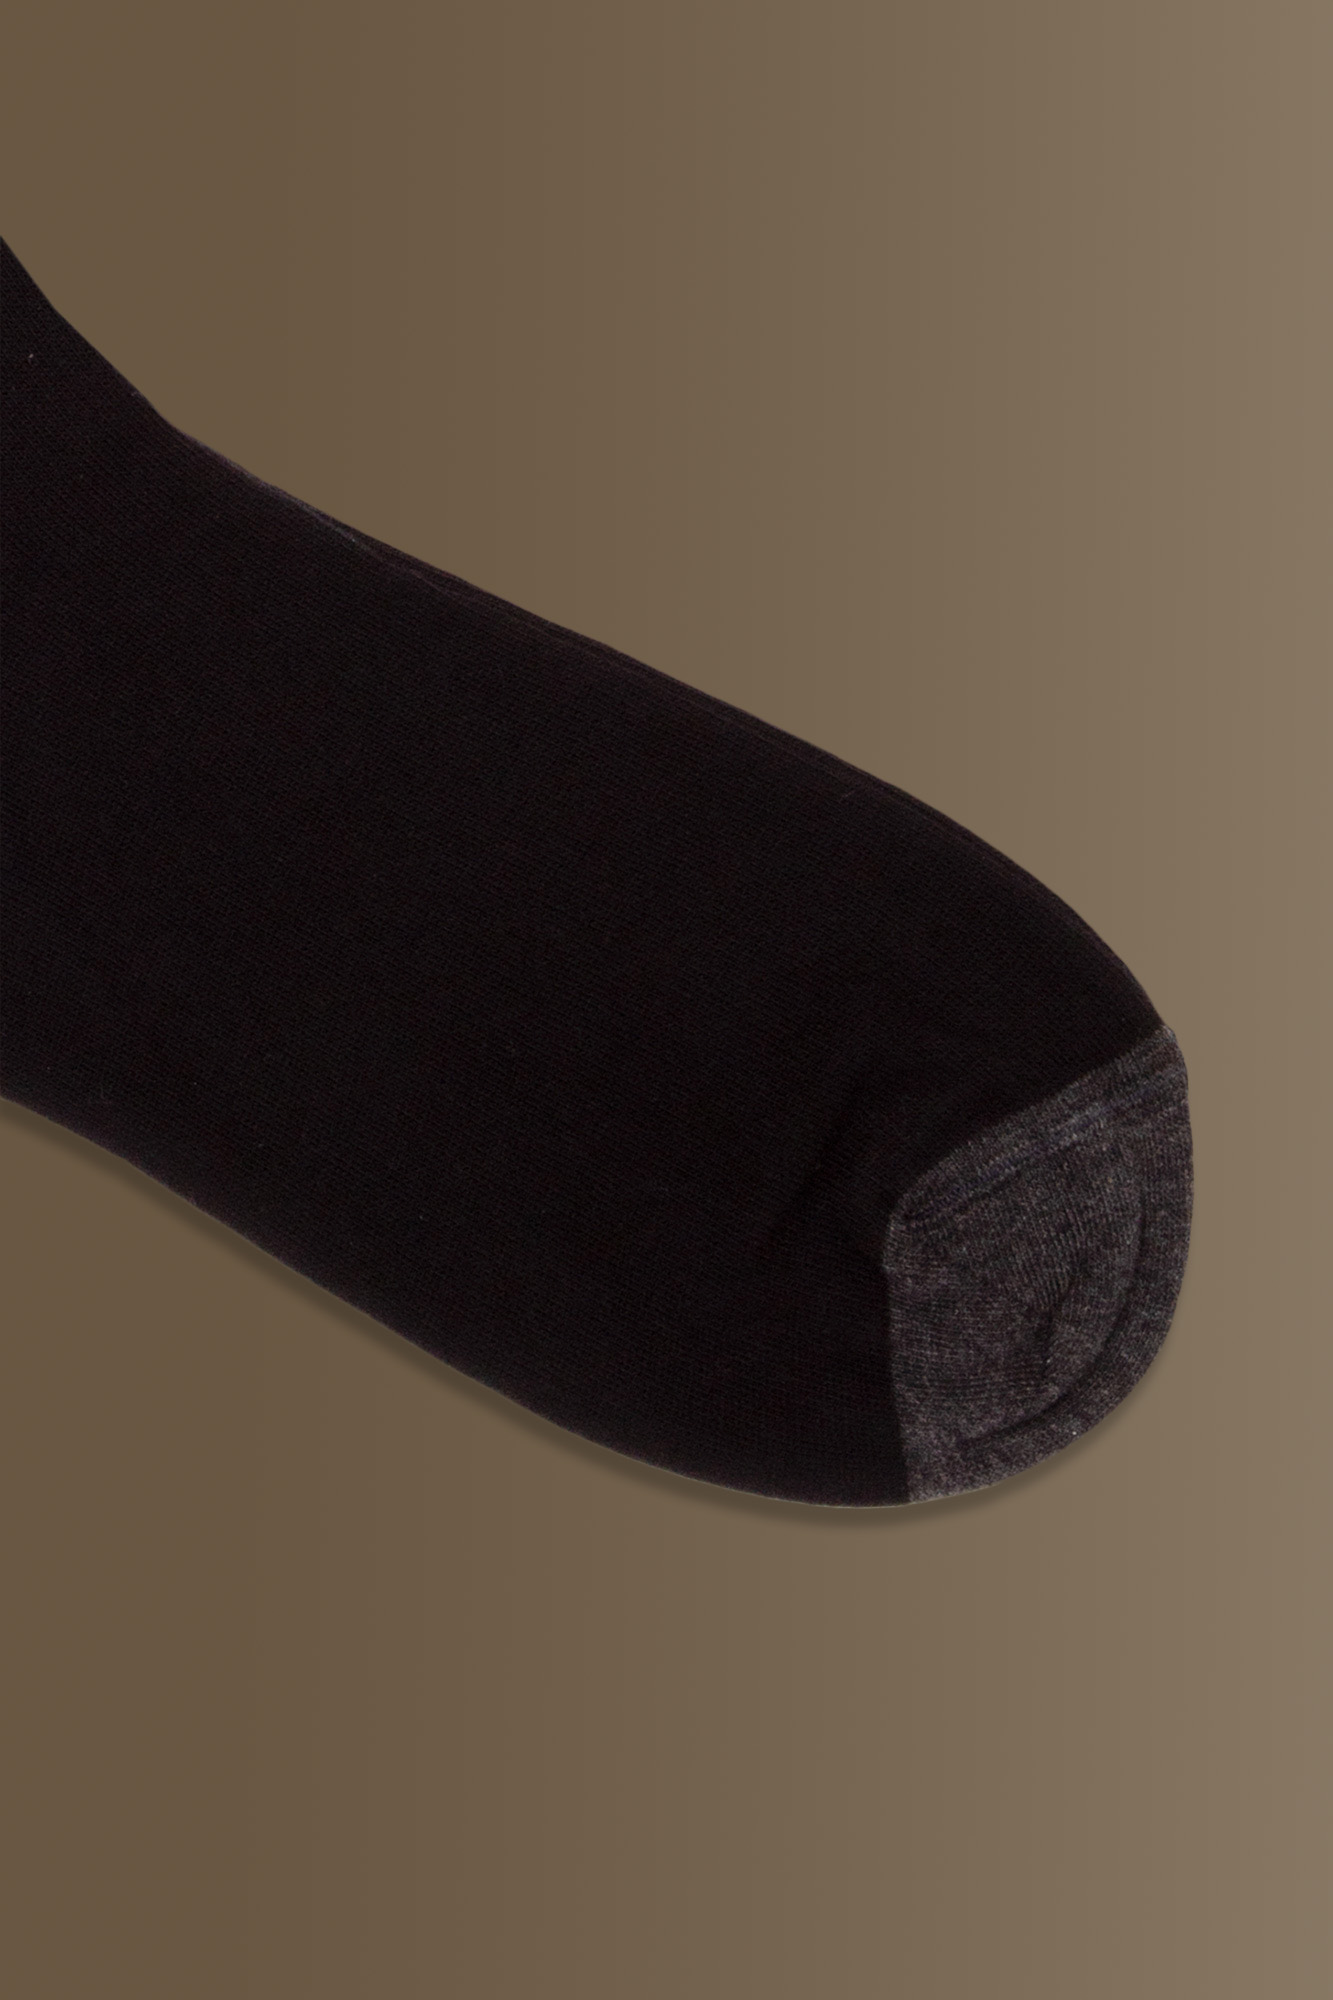 Socks - plain colour - cotton blend image number null